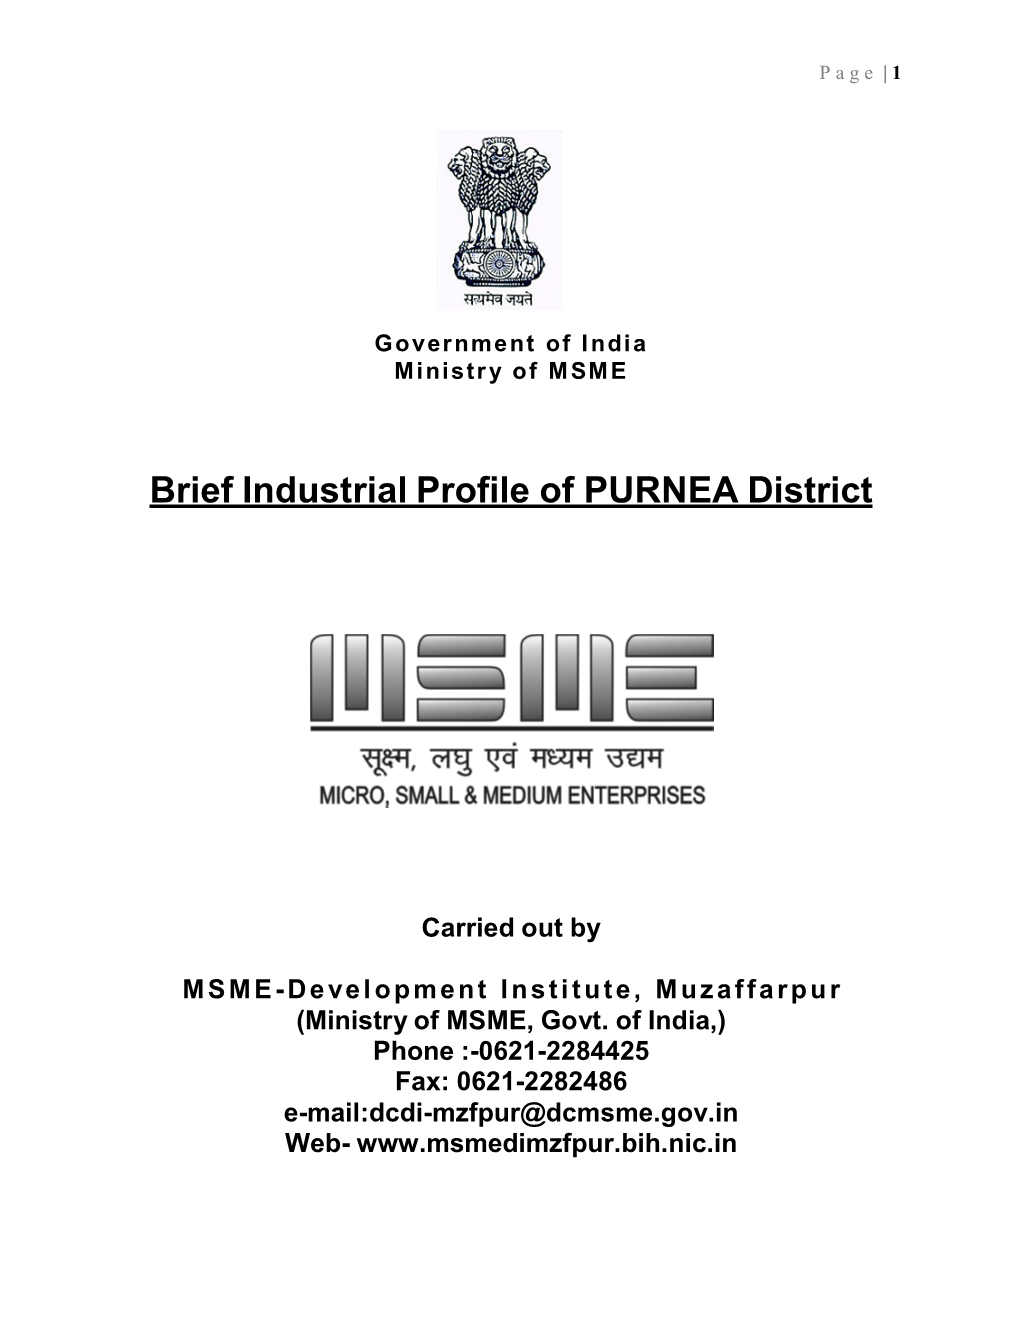 Brief Industrial Profile of PURNEA District